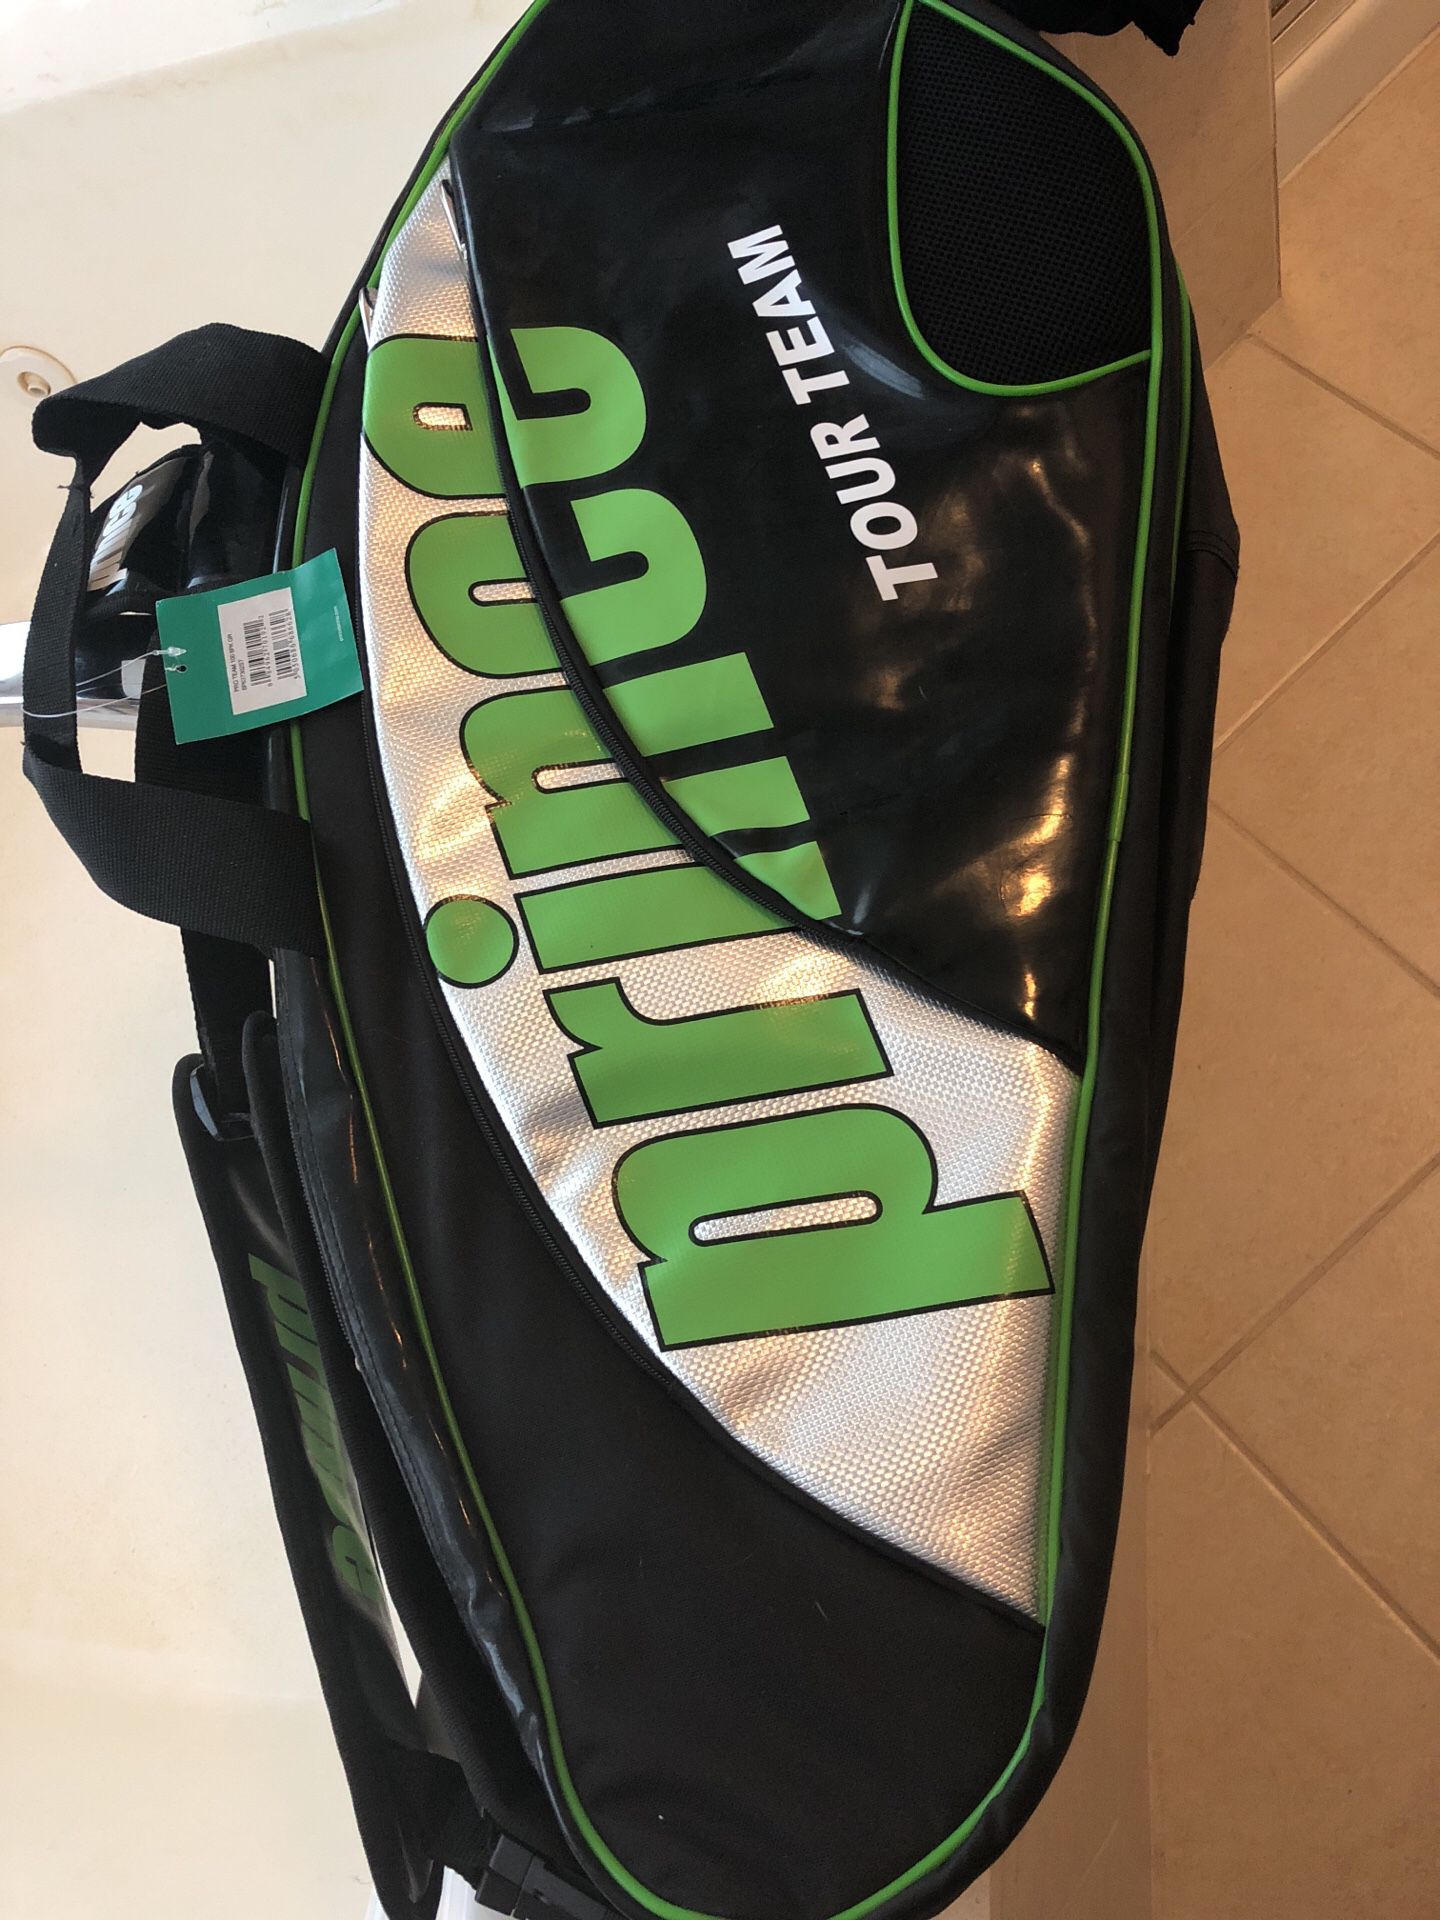 Pro team 5 racket tennis bag. New